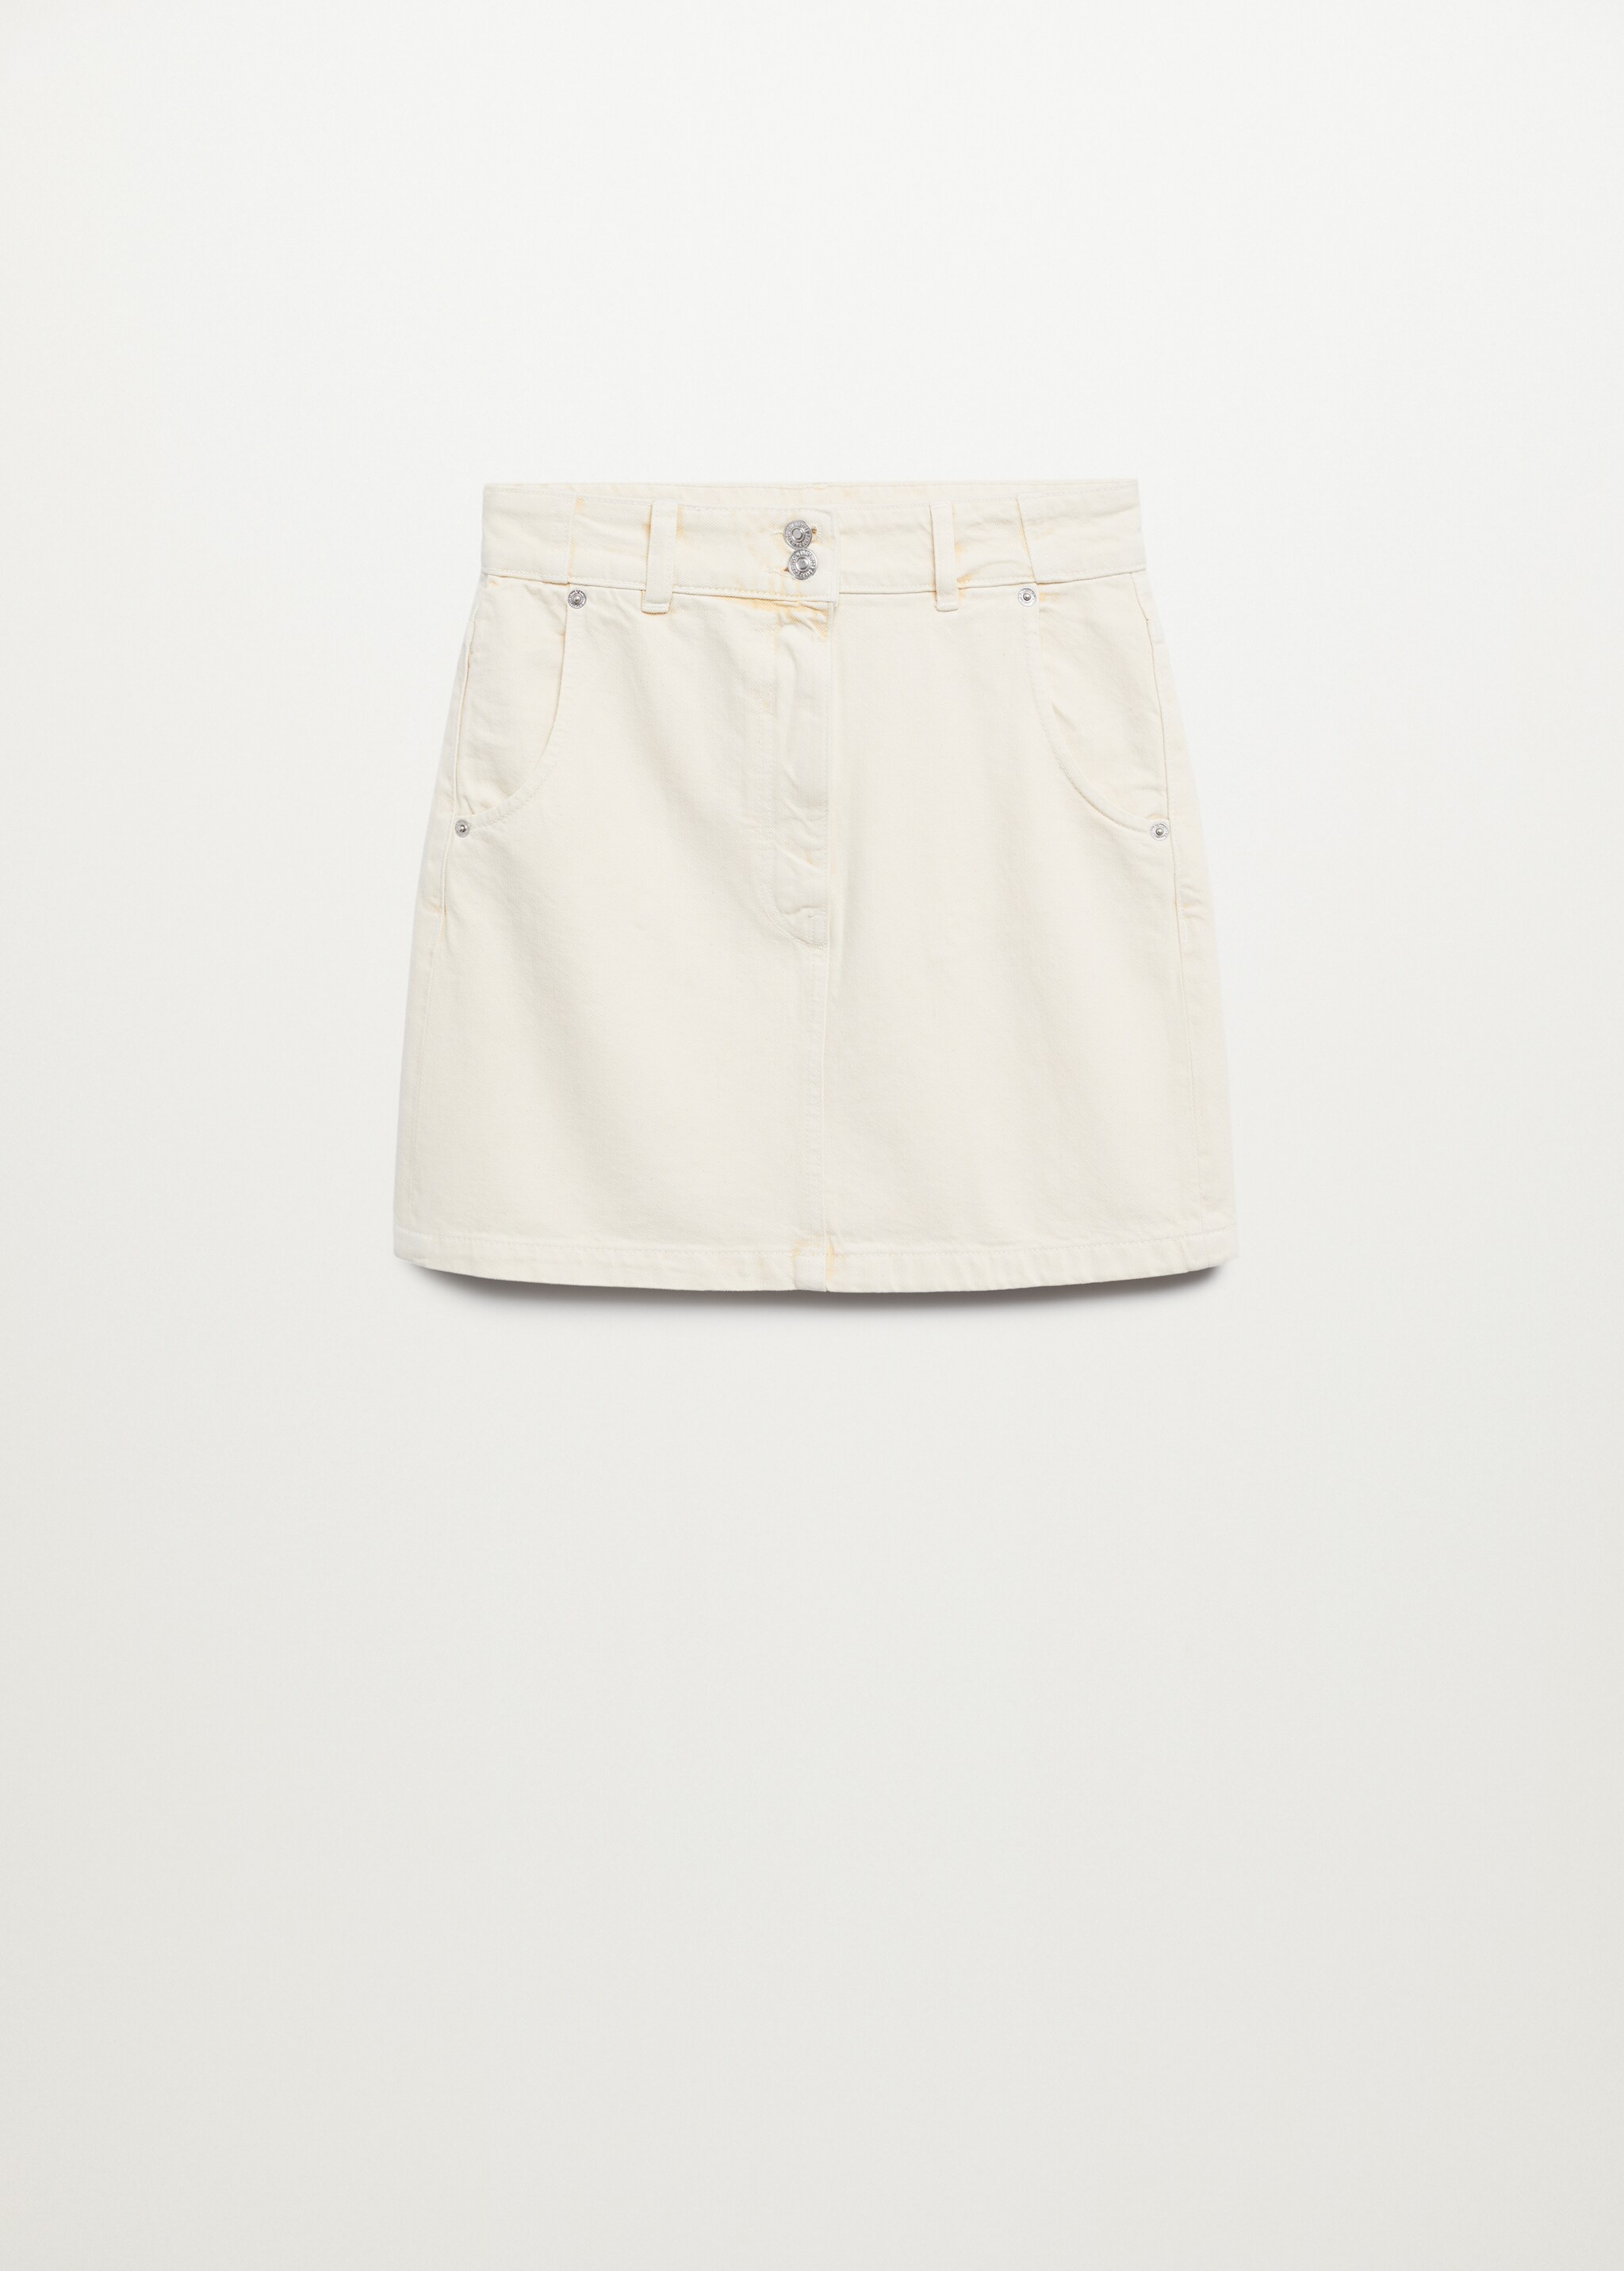 Pocket denim miniskirt - Article without model